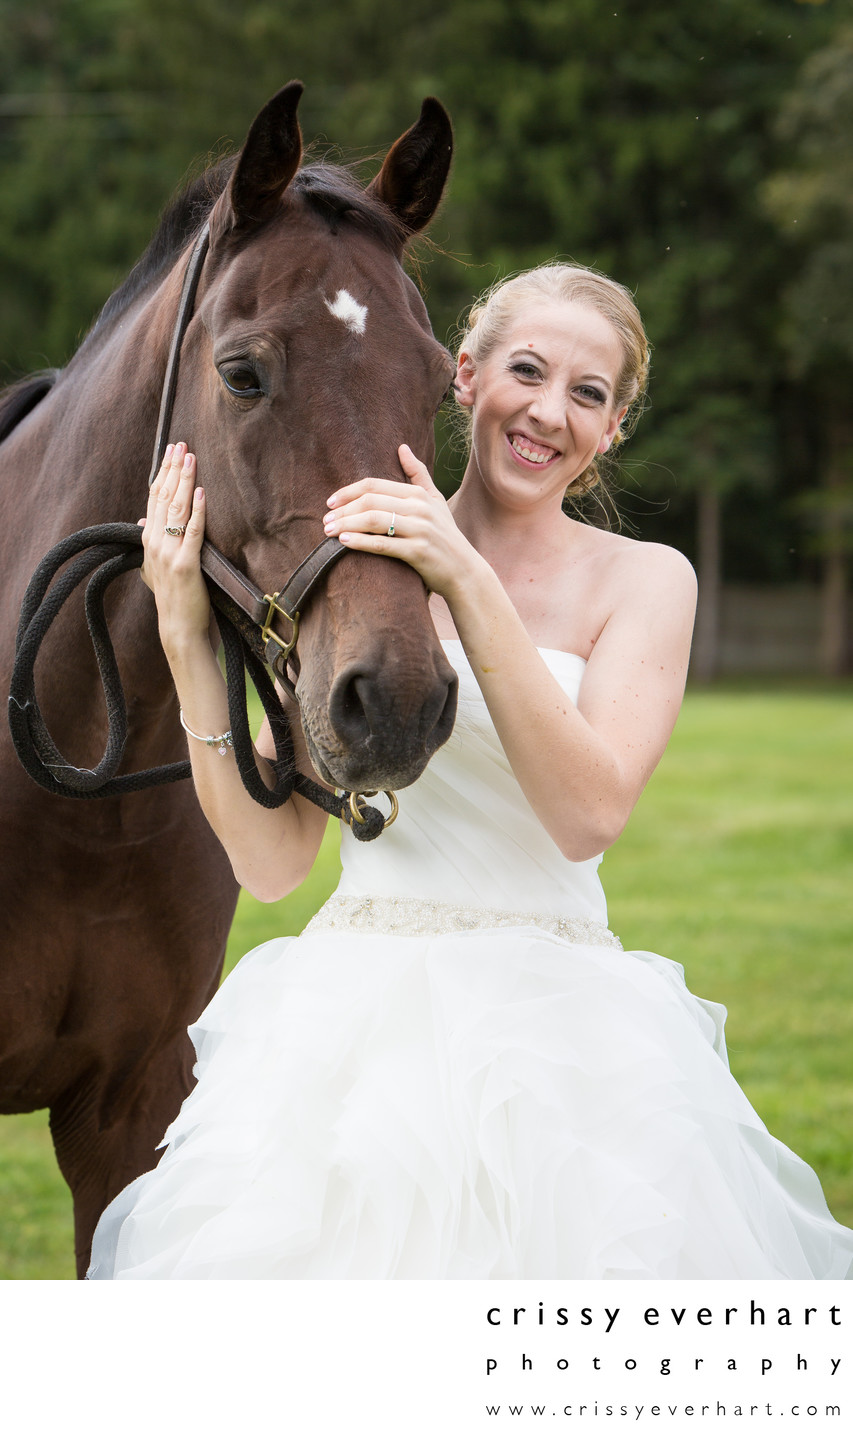 Bride with Horse - Animal Friendly Wedding Photographer